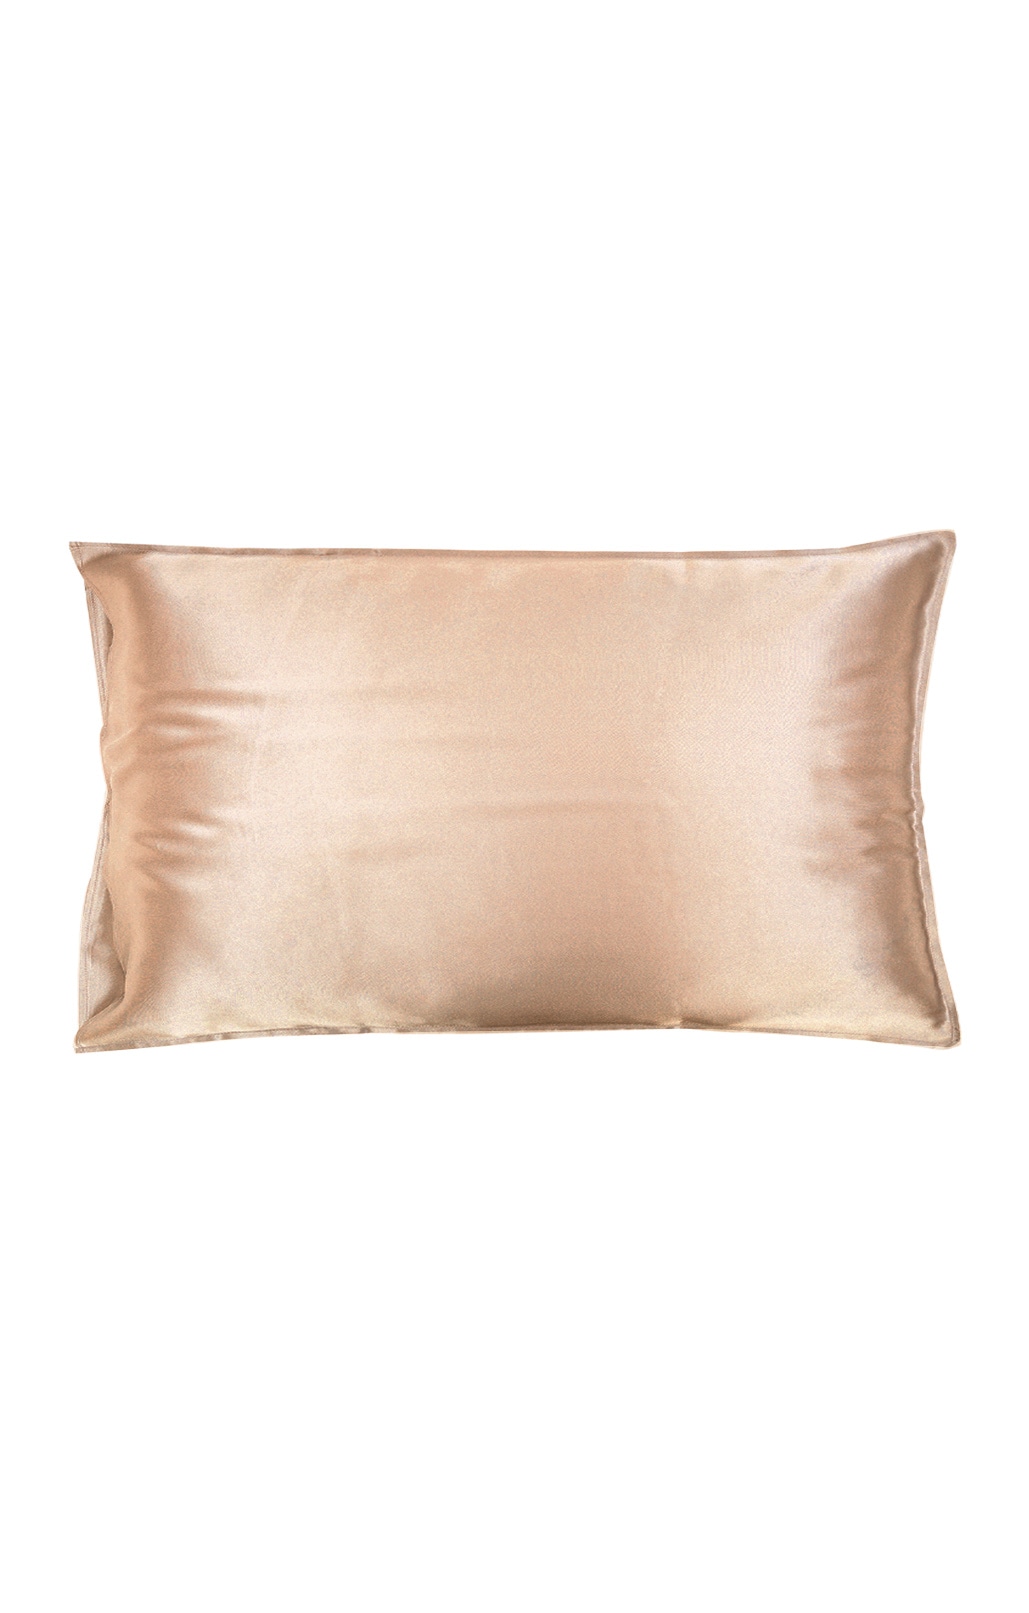 Silk pillowcase, king size, taupe